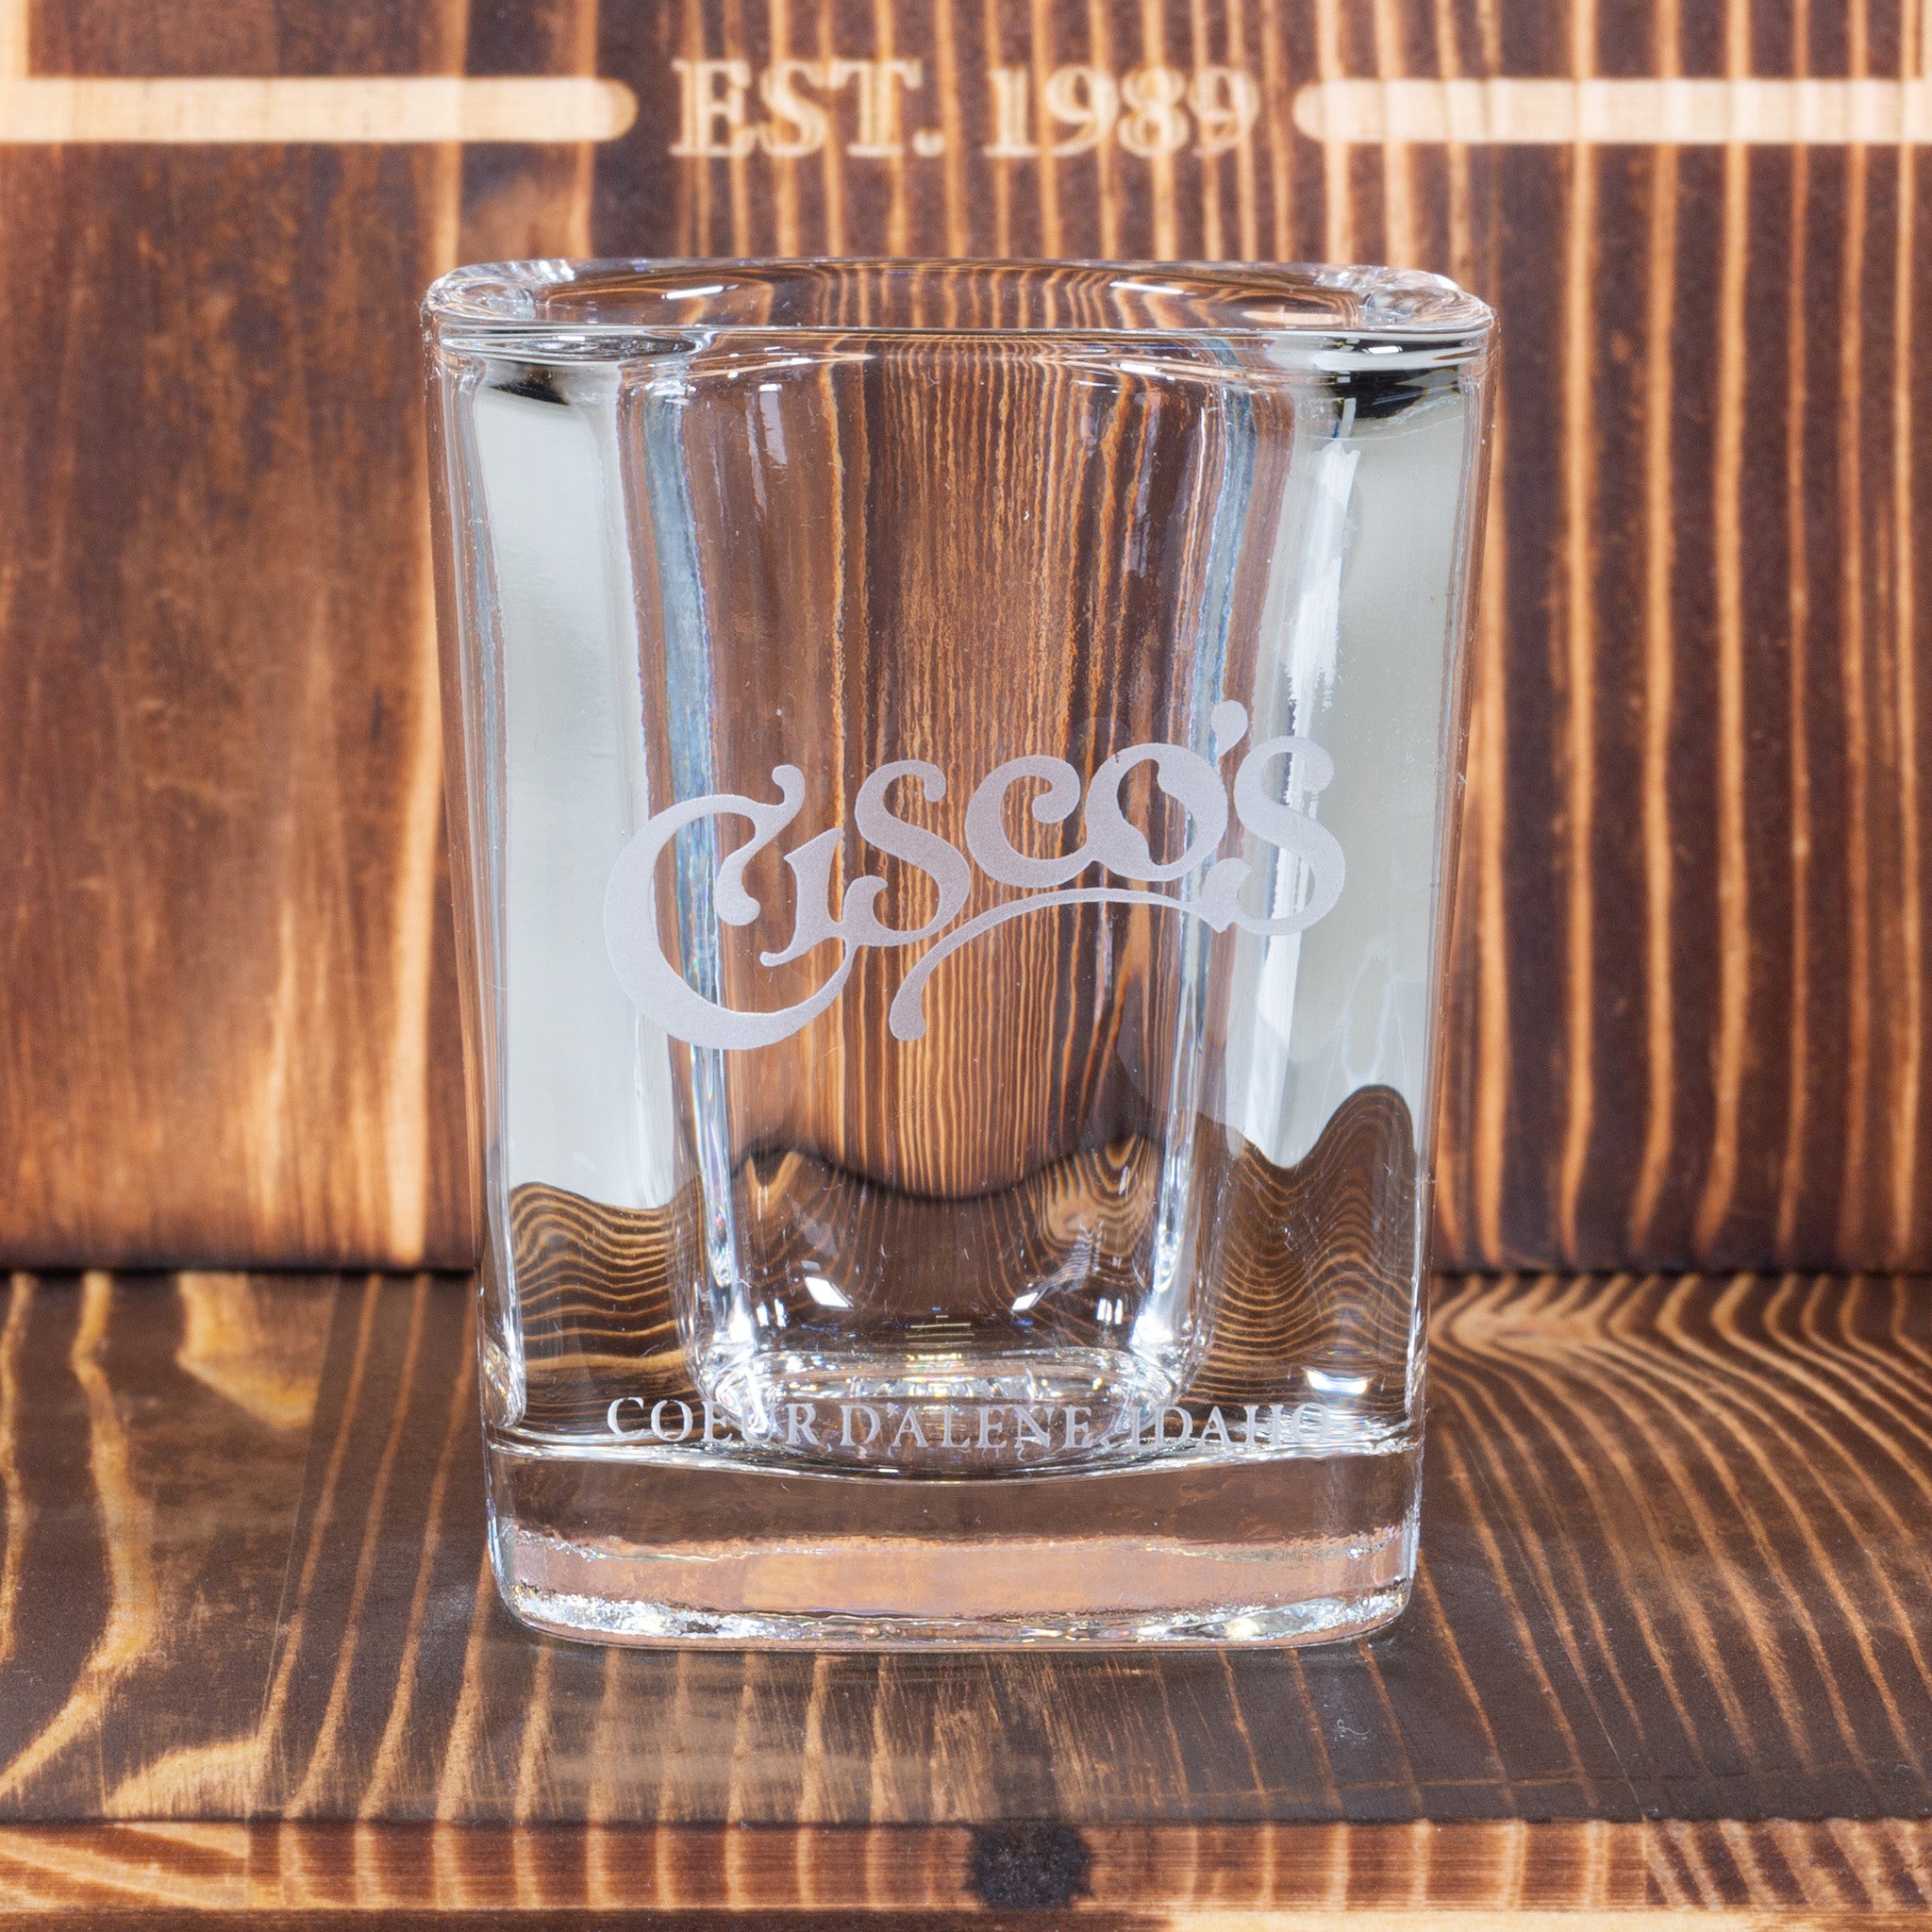 Cisco's Branded Shot Glass Set